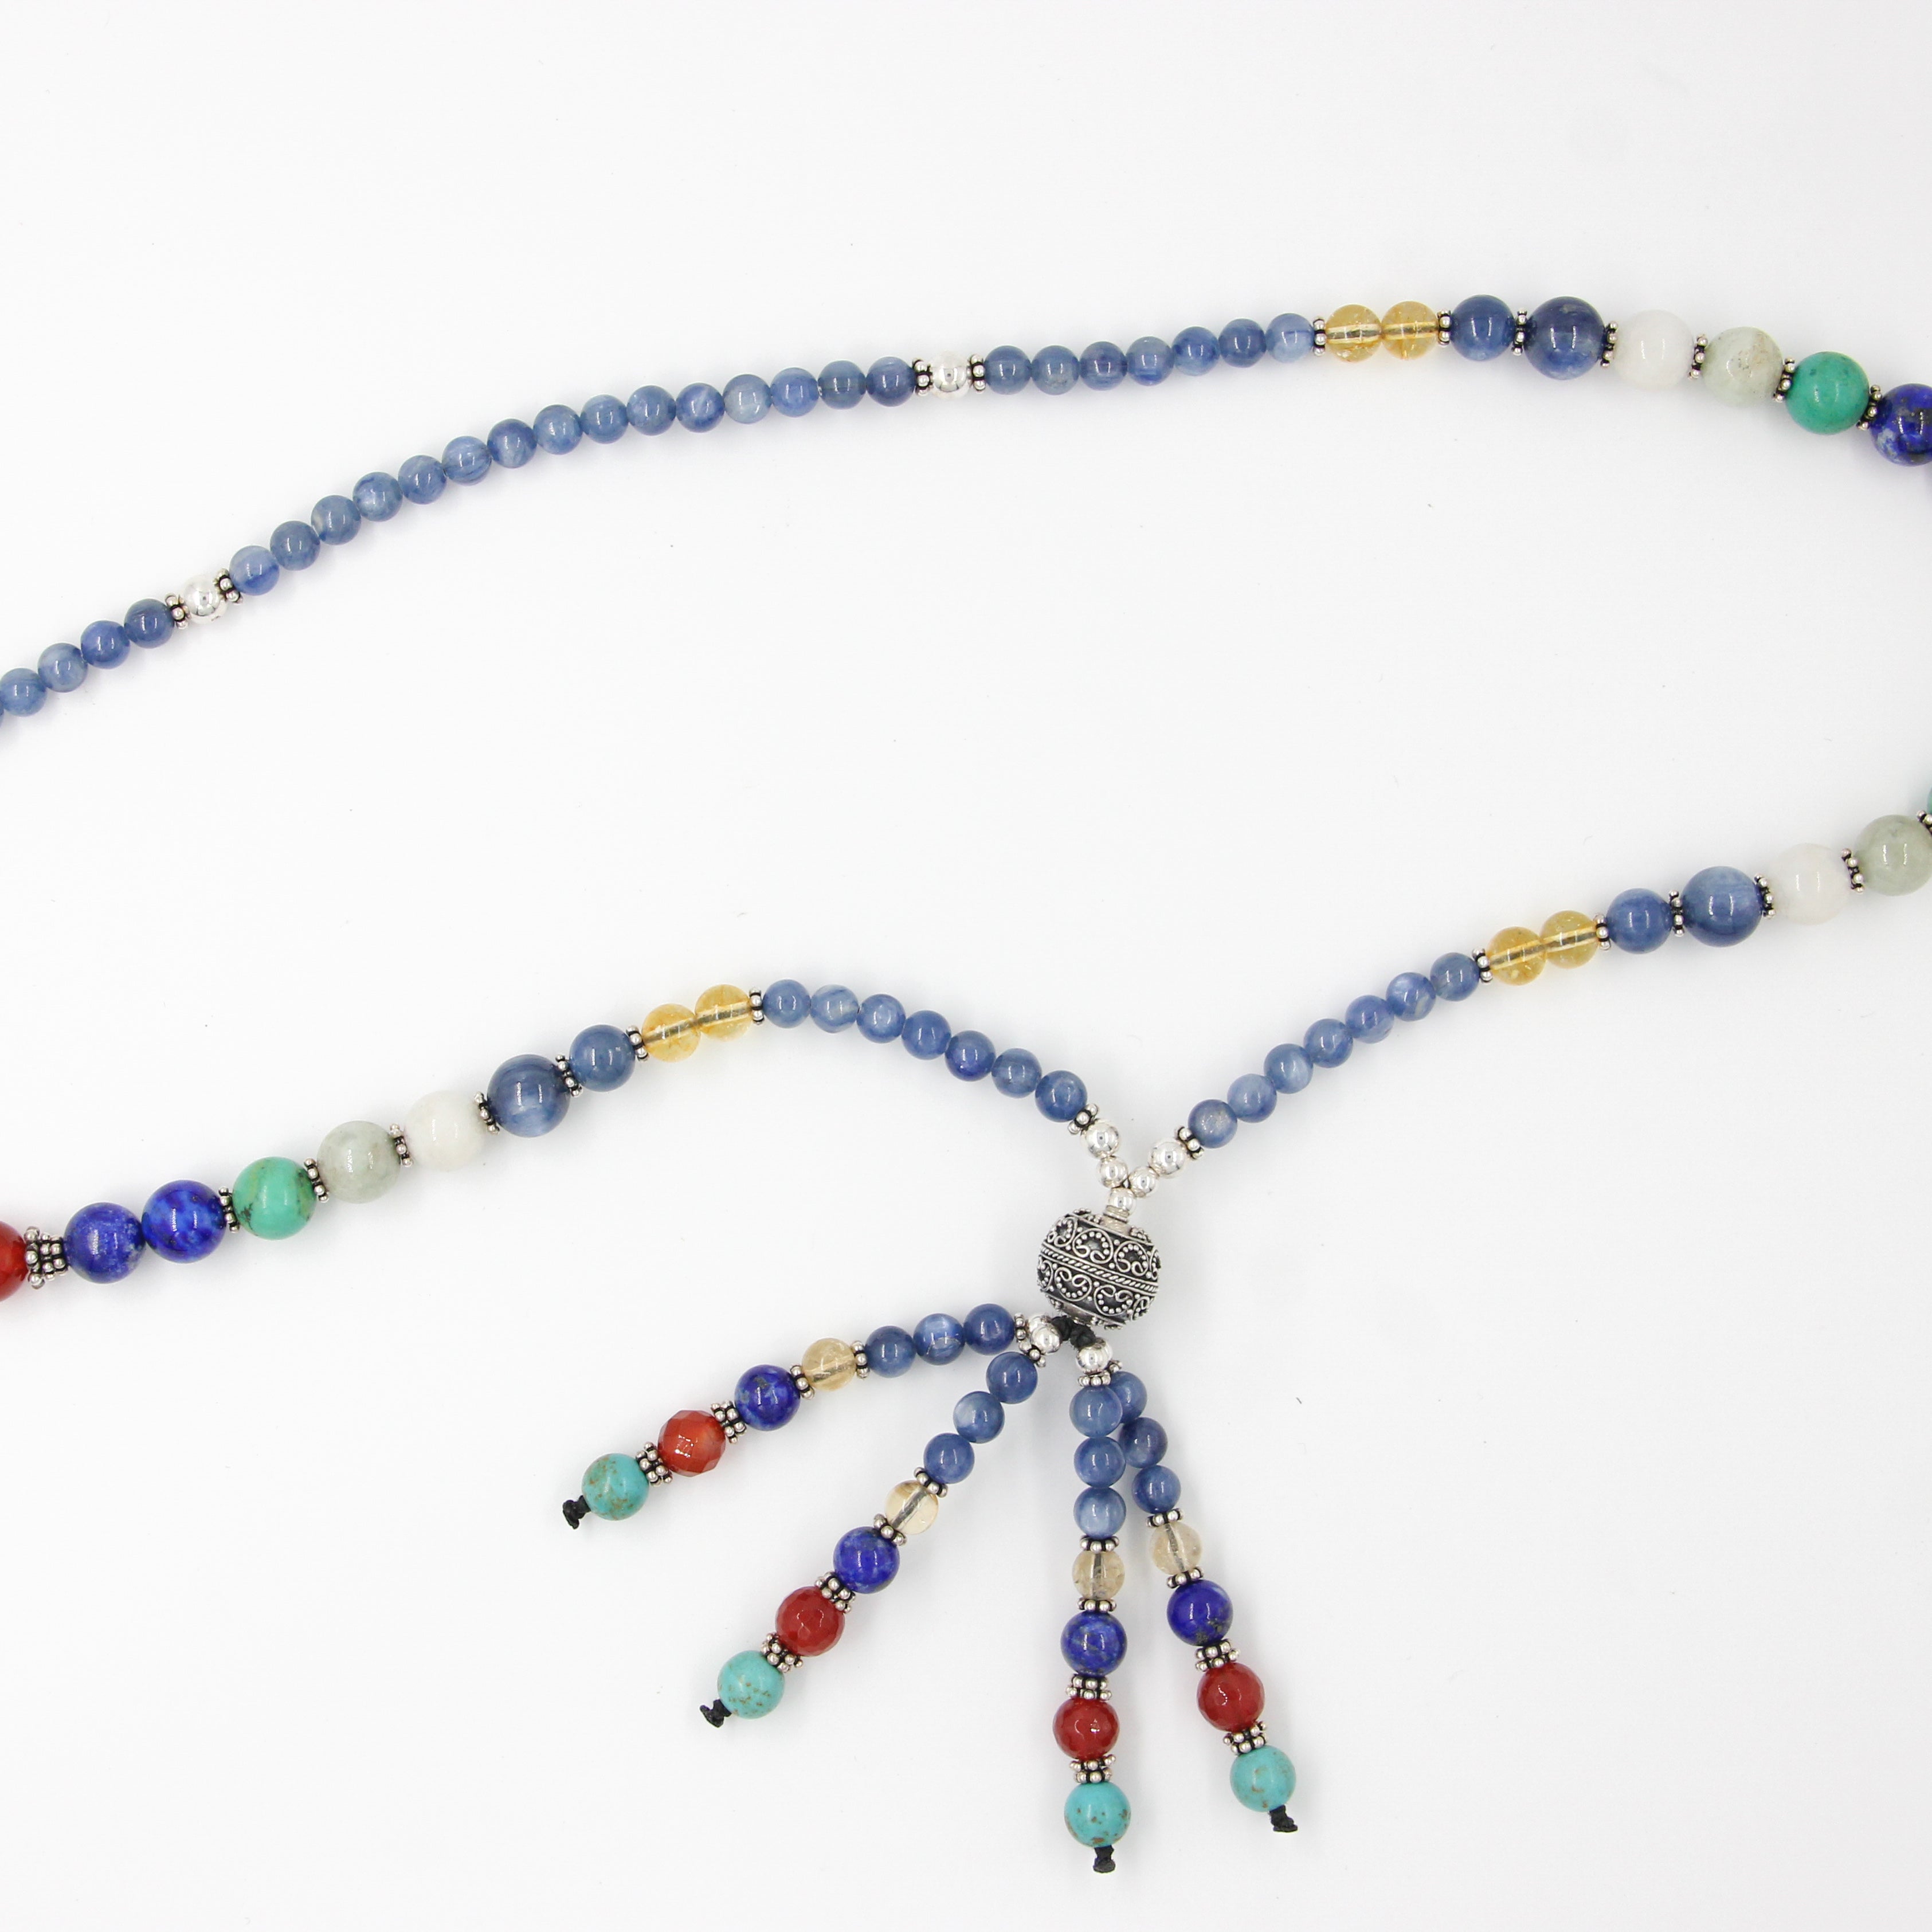 Kyanite Beads Necklace with Citrine, Rainbow Moon Stone, Lapis Lazuli, Carnelian, Turquoise, Jade and Silver Beads